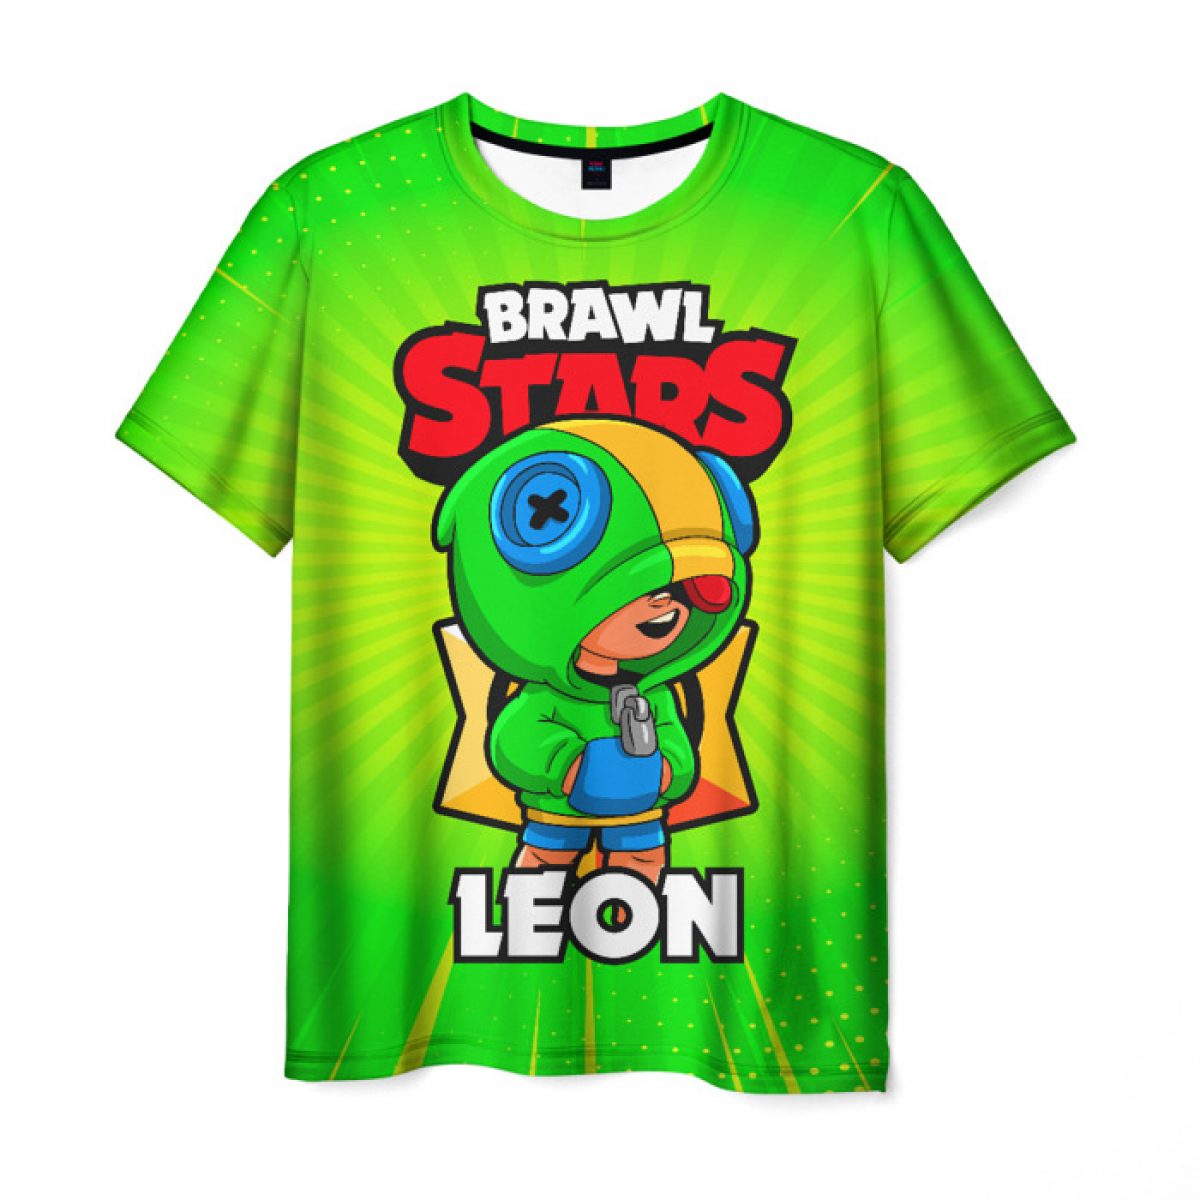 Buy Men S T Shirt Green Design Print Brawl Stars Leon Idolstore - leon in shop brawl stars